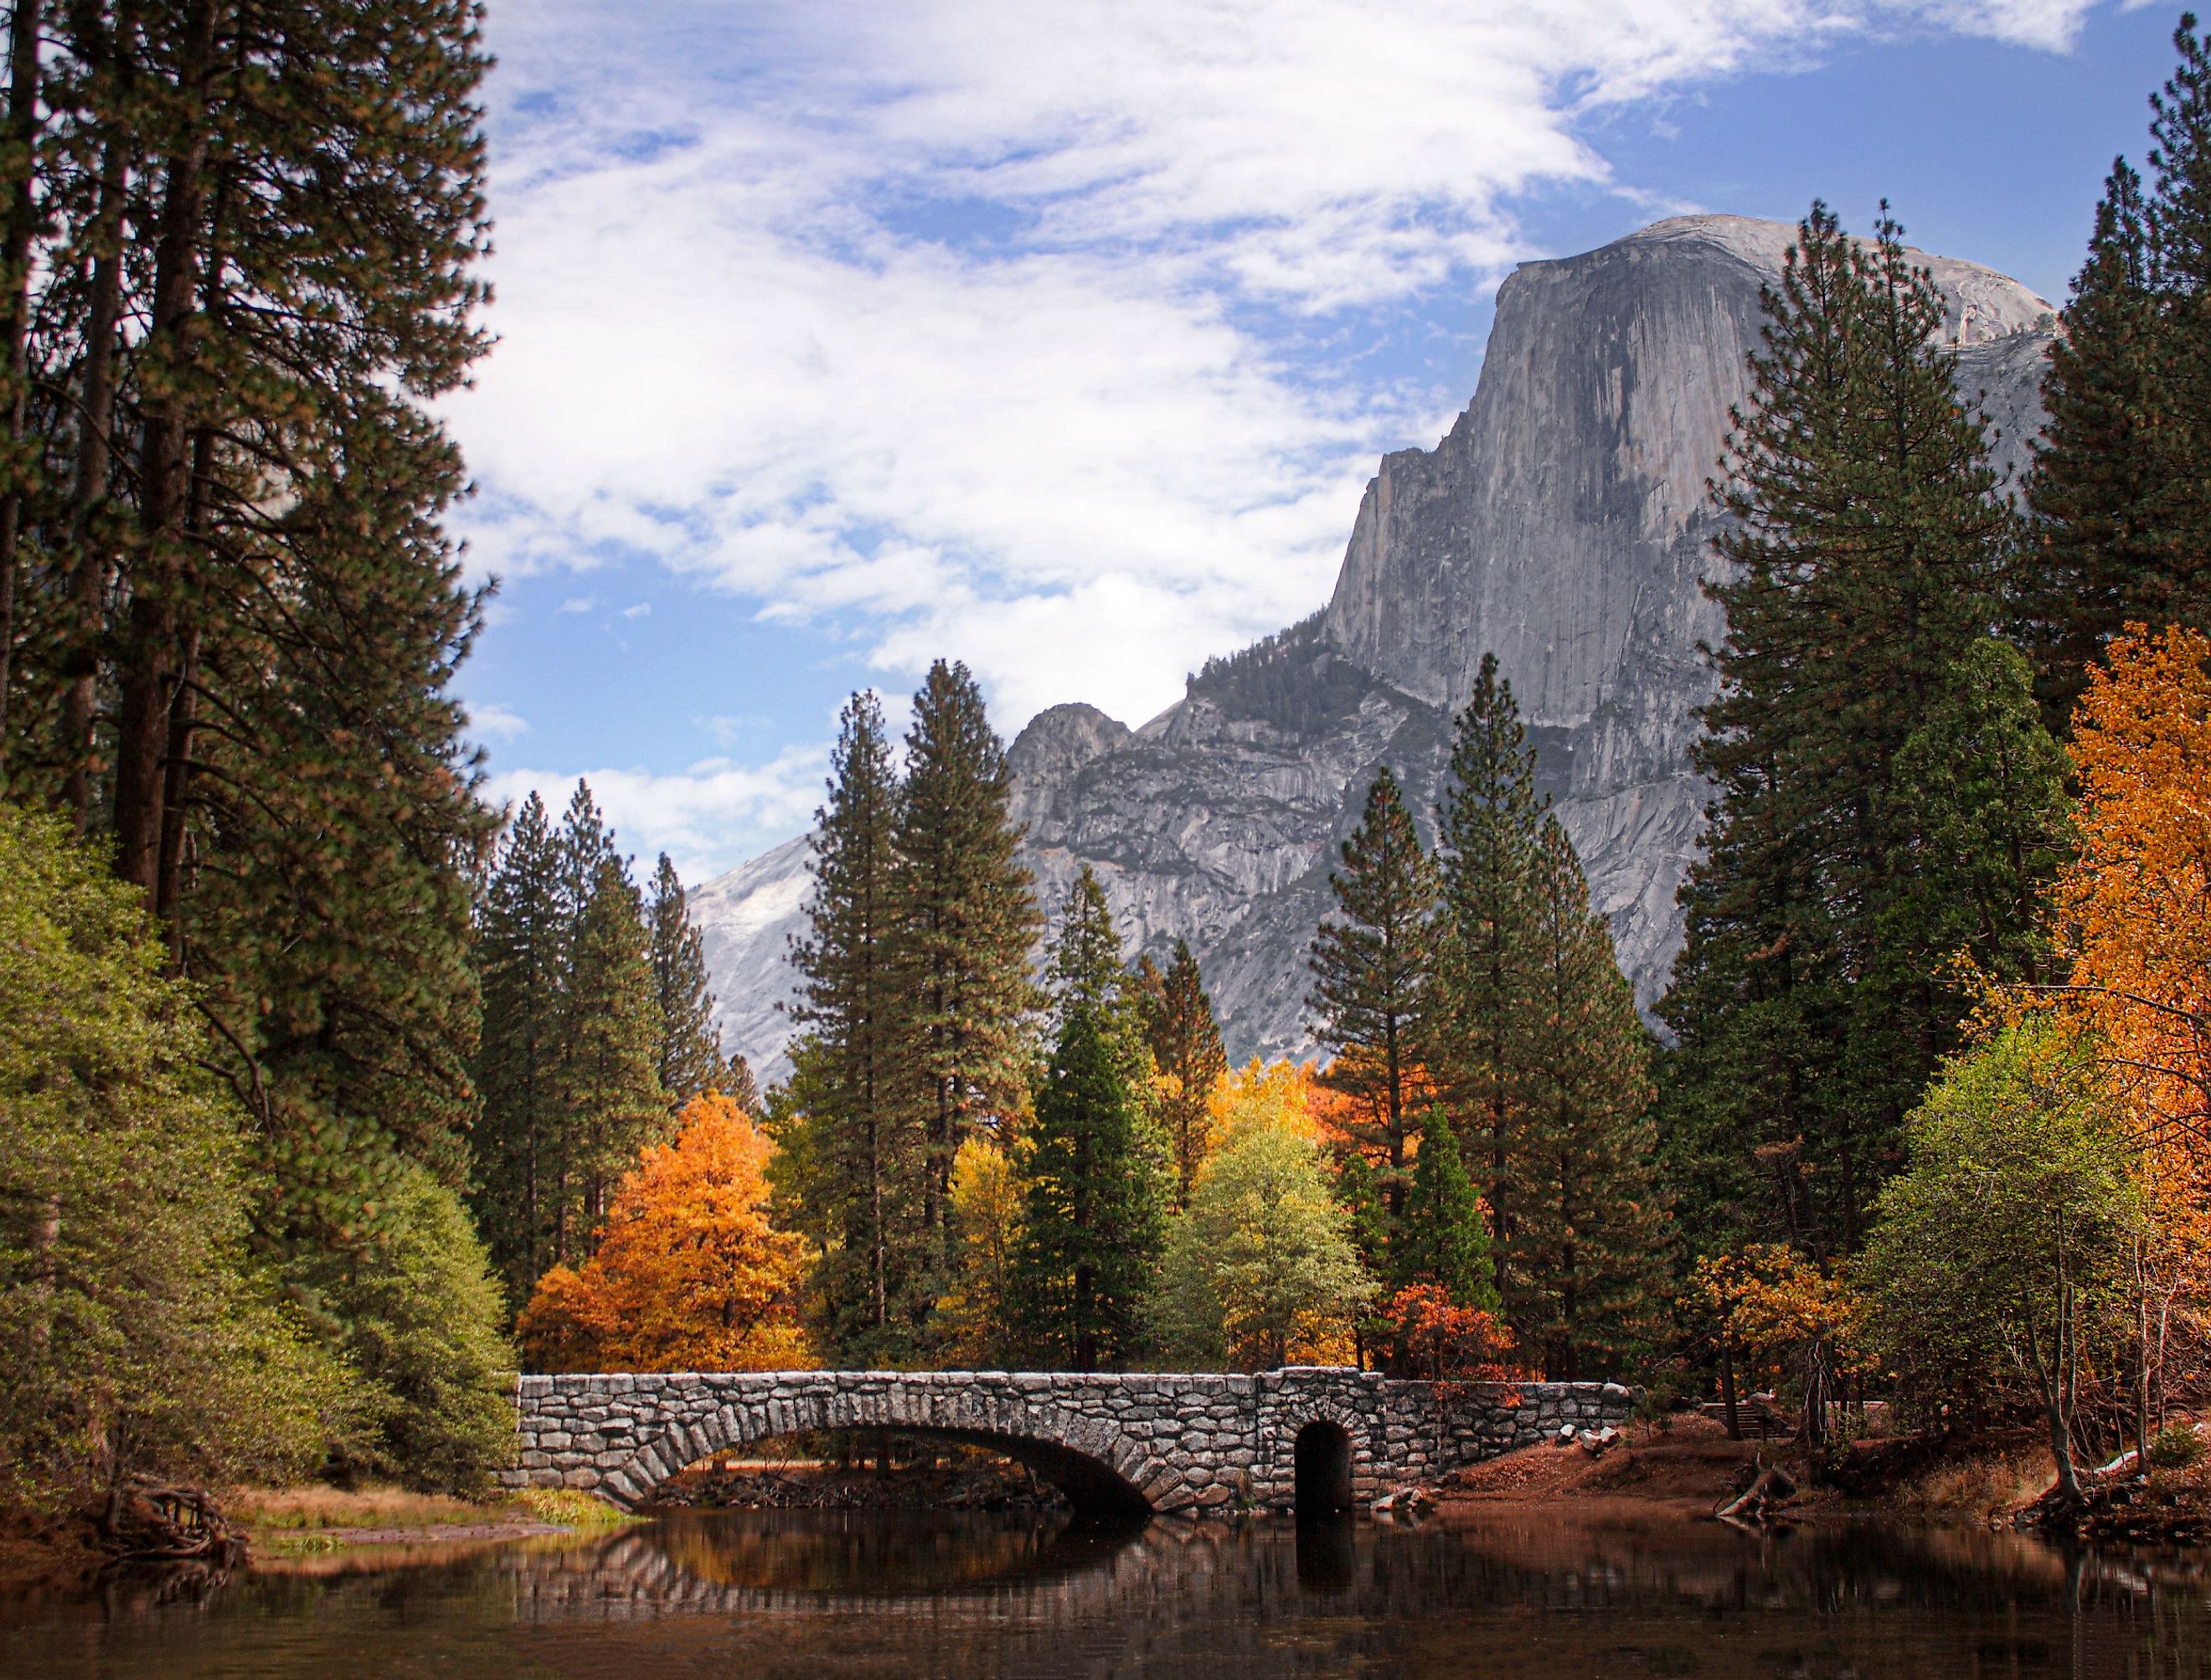 Half Dome in Yosemite National Park. Image credit sixfournorth via Shutterstock